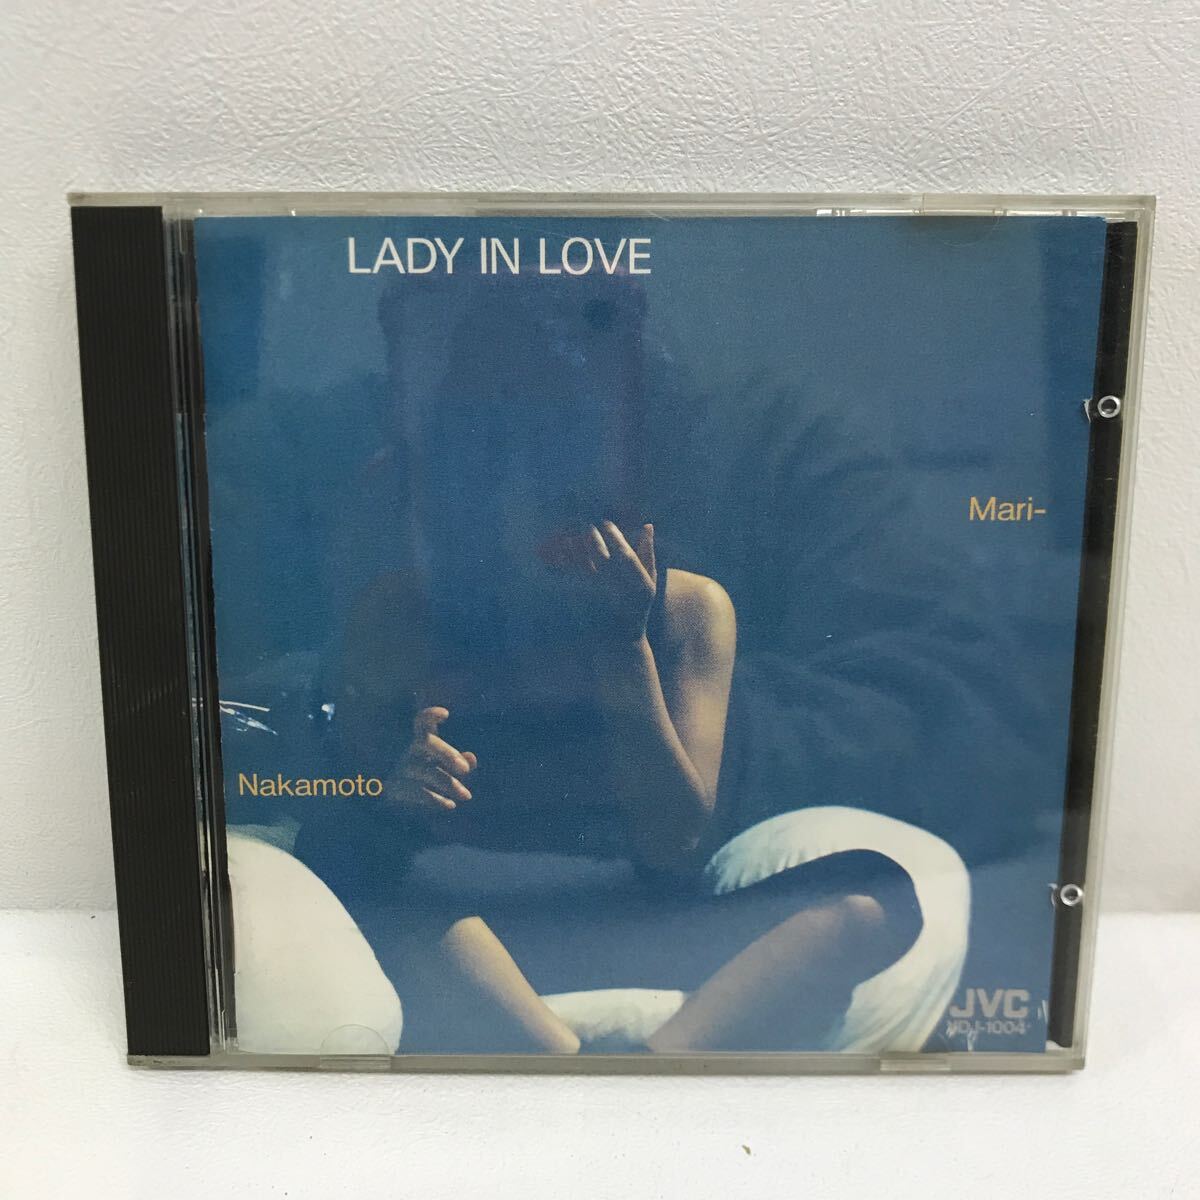 I0507A3 中本マリ レイディ・イン・ラヴ MARI NAKAMOTO LADY IN LOVE CD 音楽 JAZZ ジャズVictor ビクター / YOU GAVE TO ME / OOPS! 他の画像1